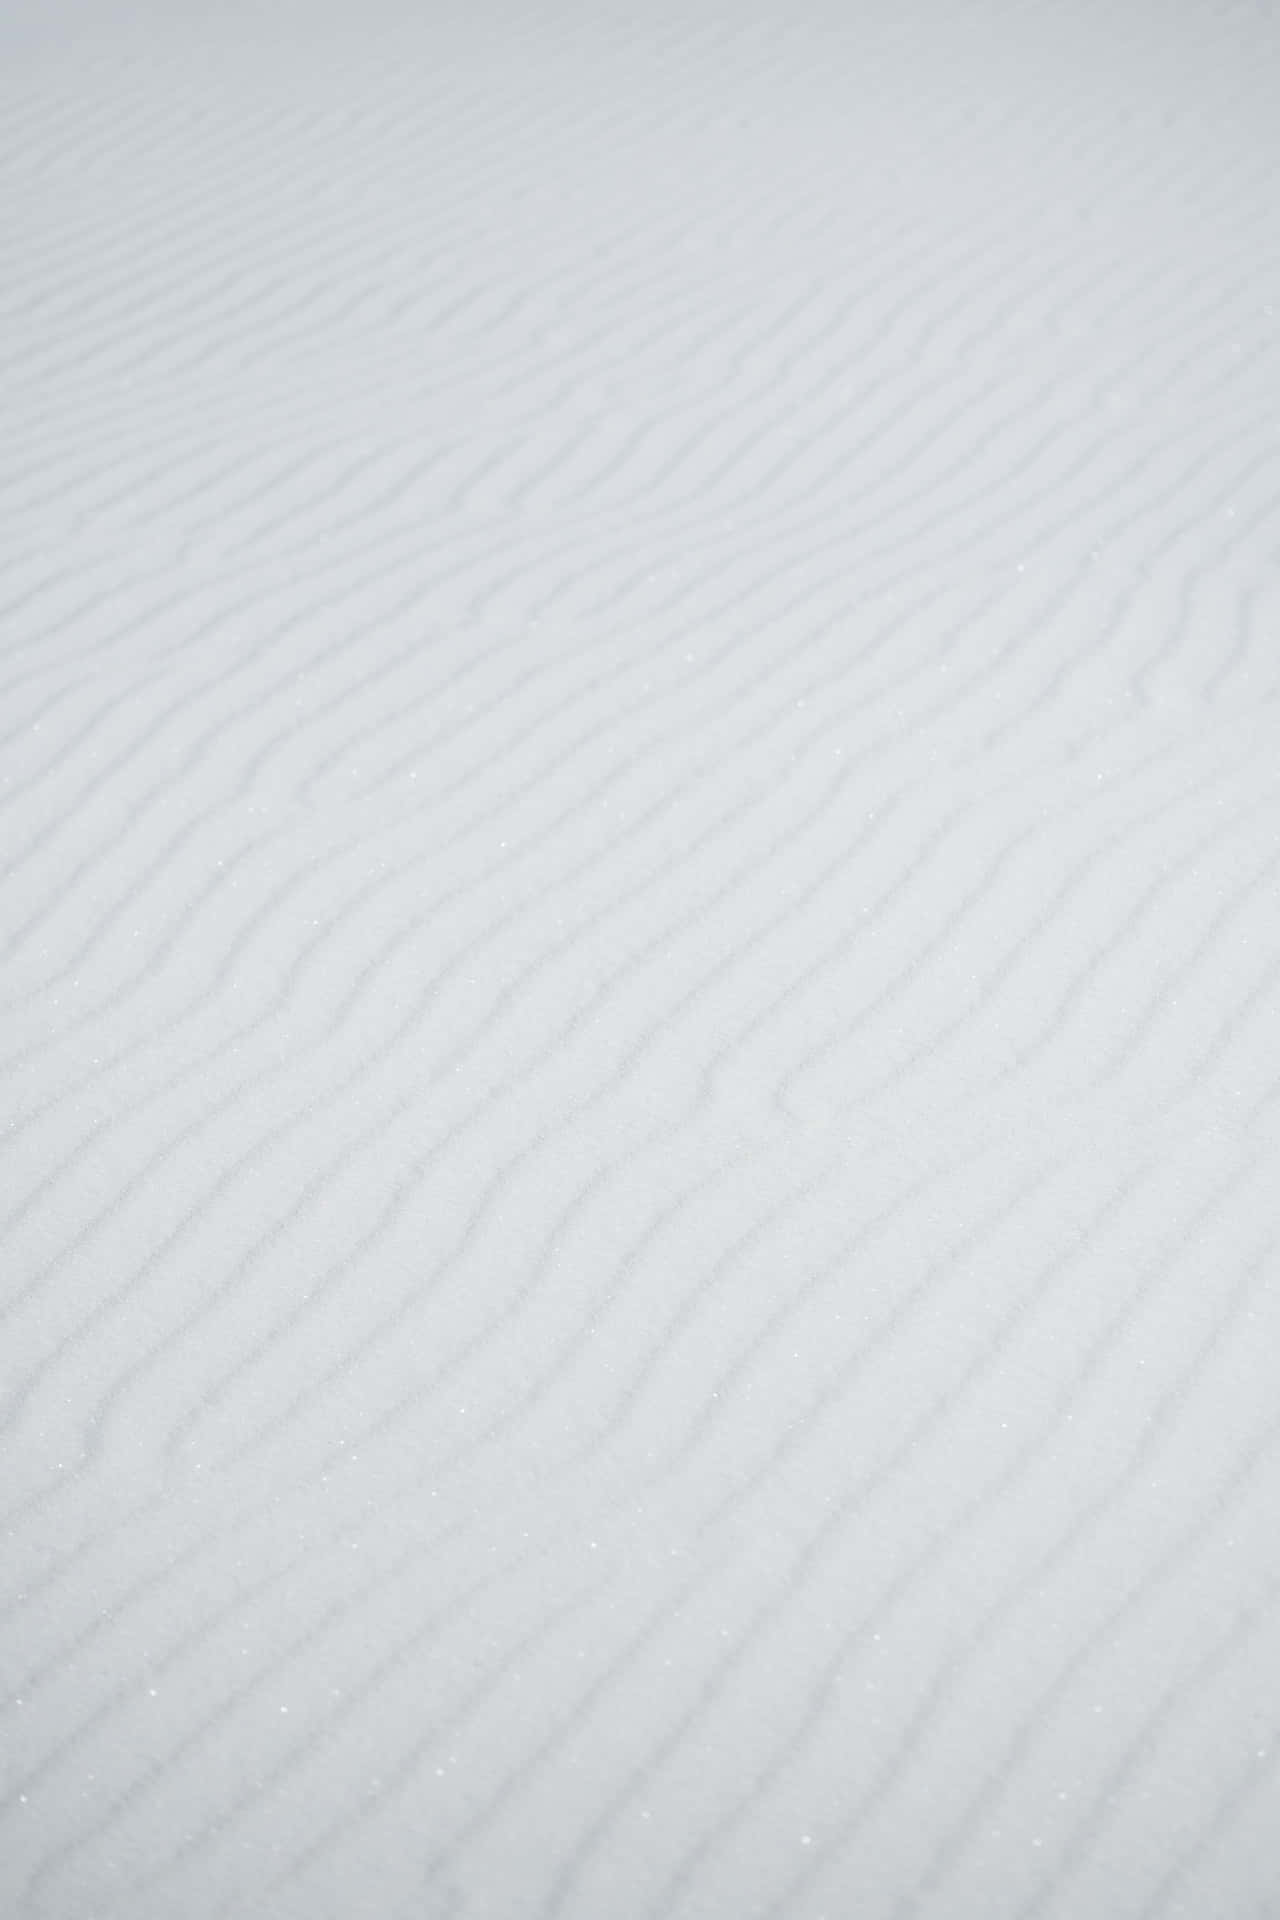 White Image Background Aesthetic Lines